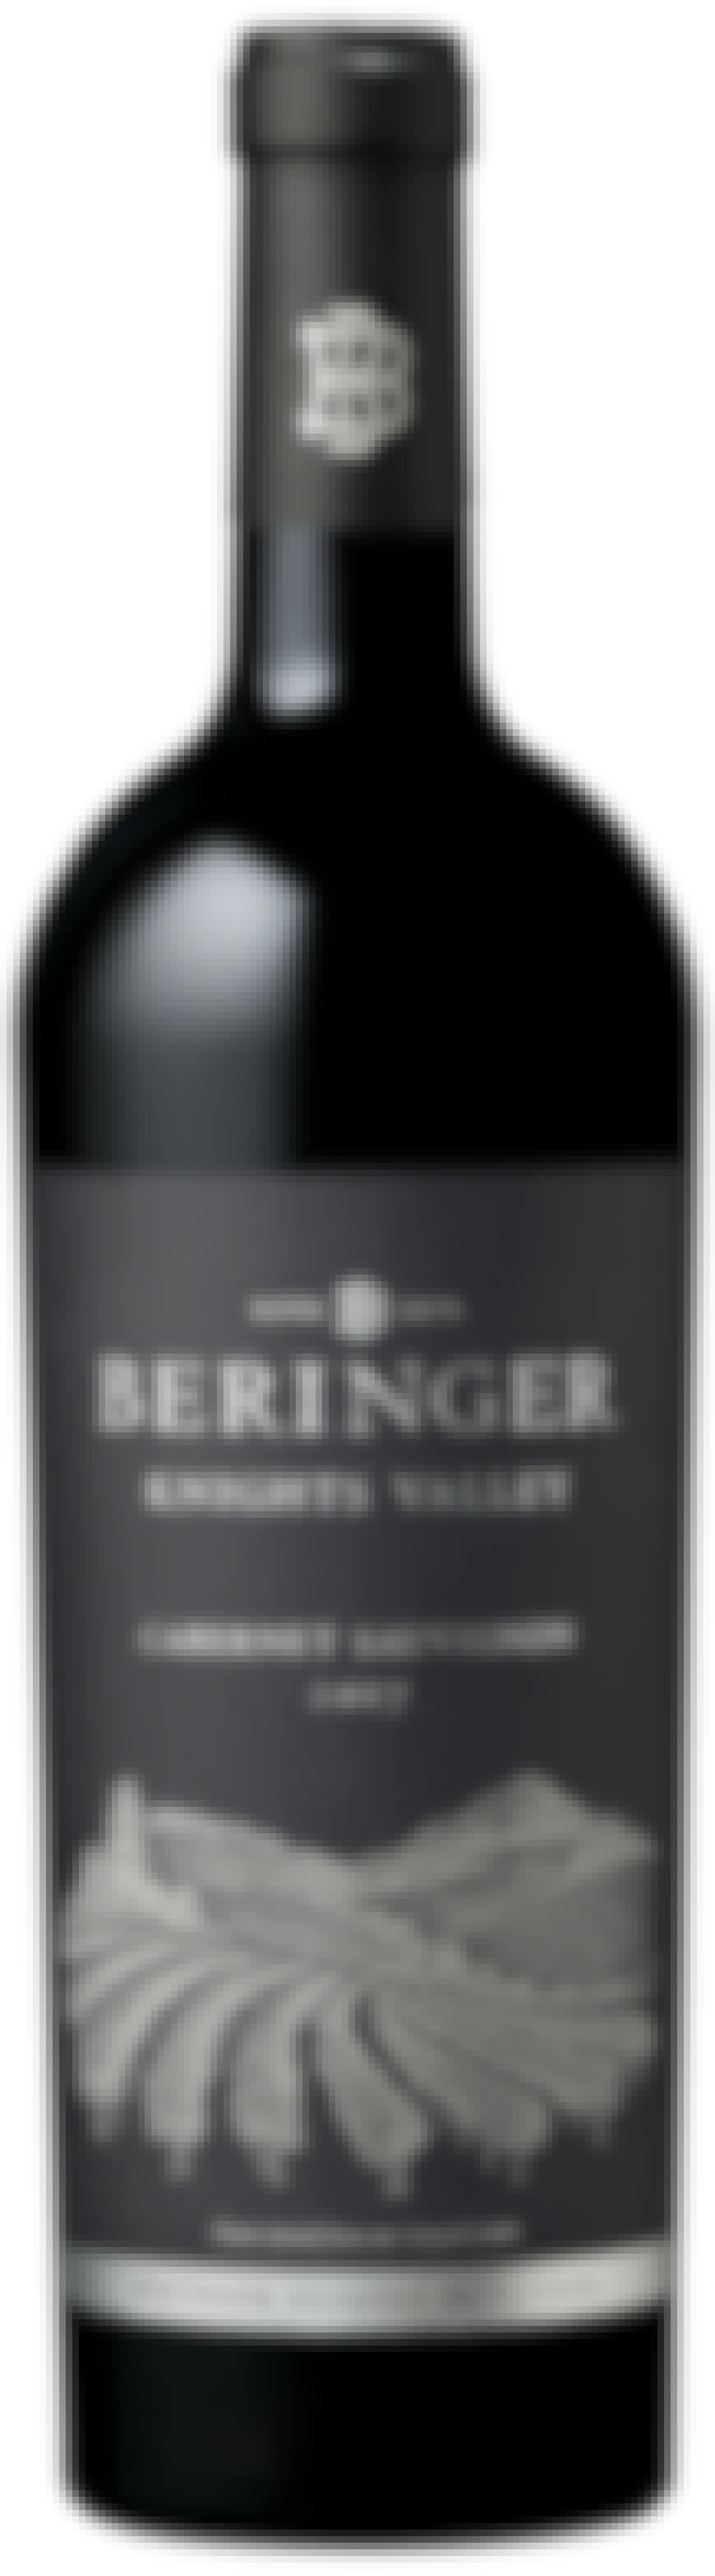 Beringer Knights Valley Cabernet Sauvignon 2017 750ml